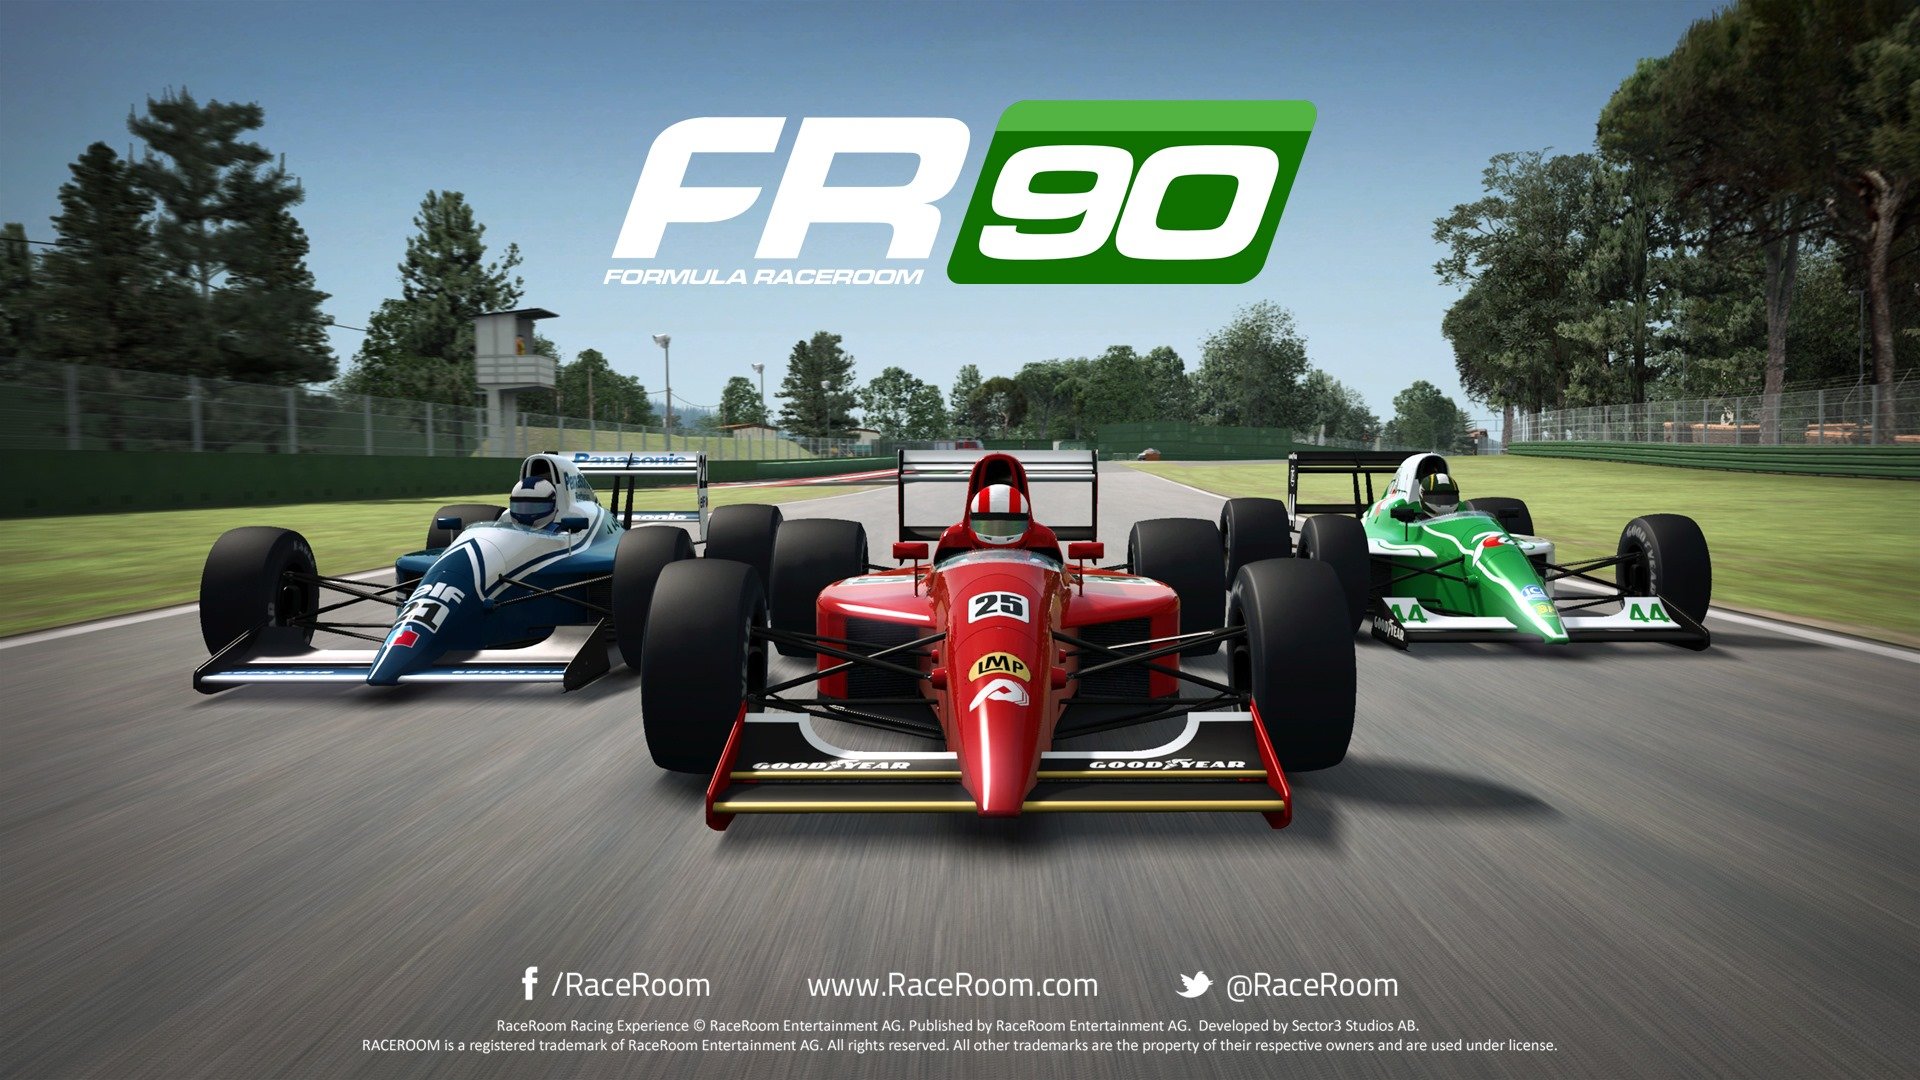 More information about "RaceRoom Racing Experience: disponibile l'update con la Formula RR90"